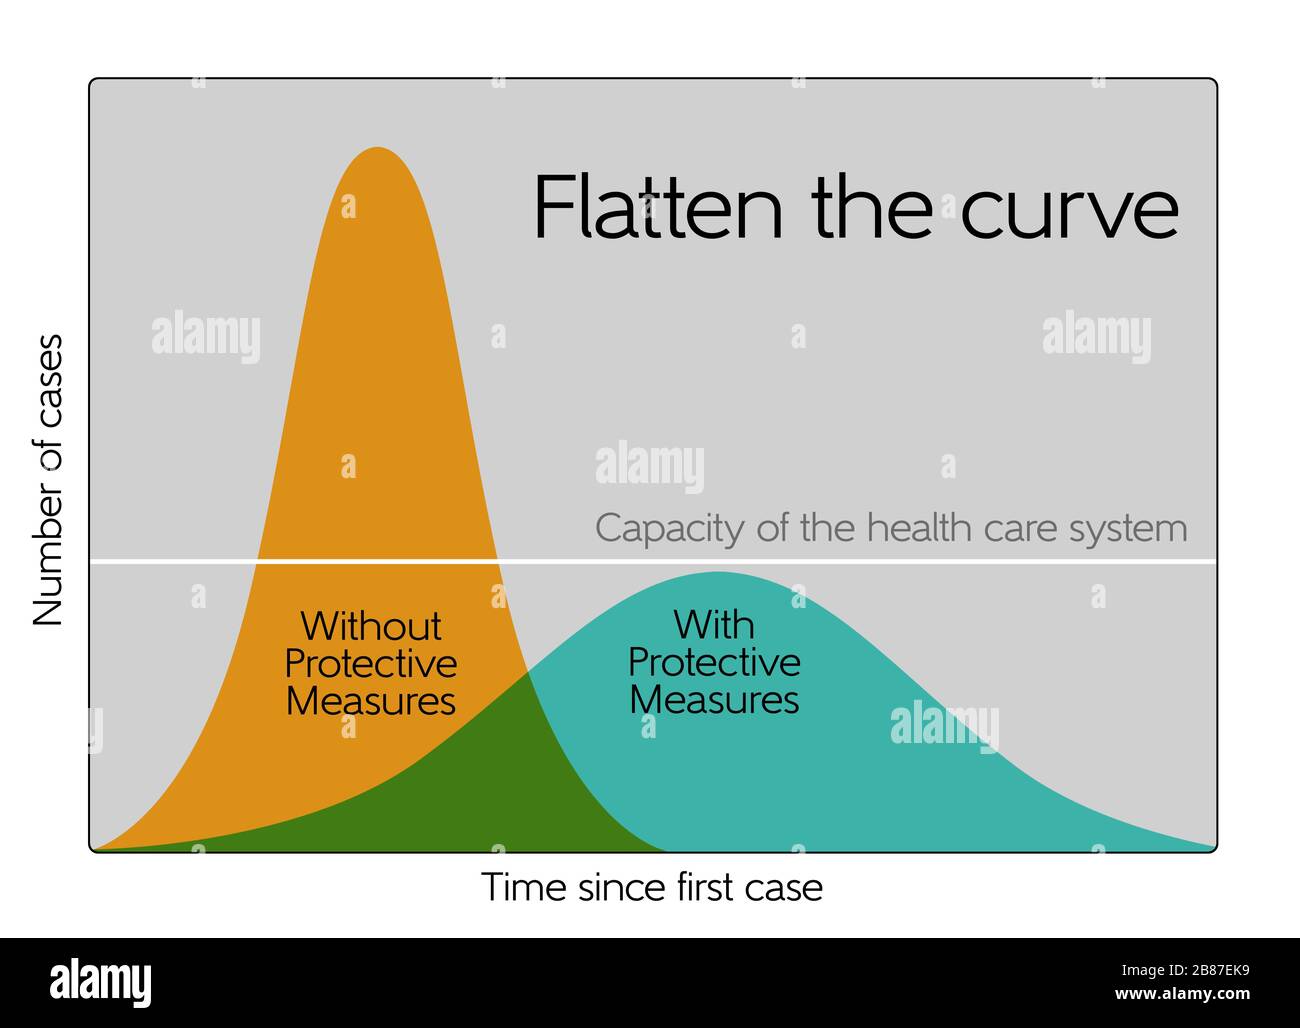 Flatten the curve chart - Corona virus Stock Photo